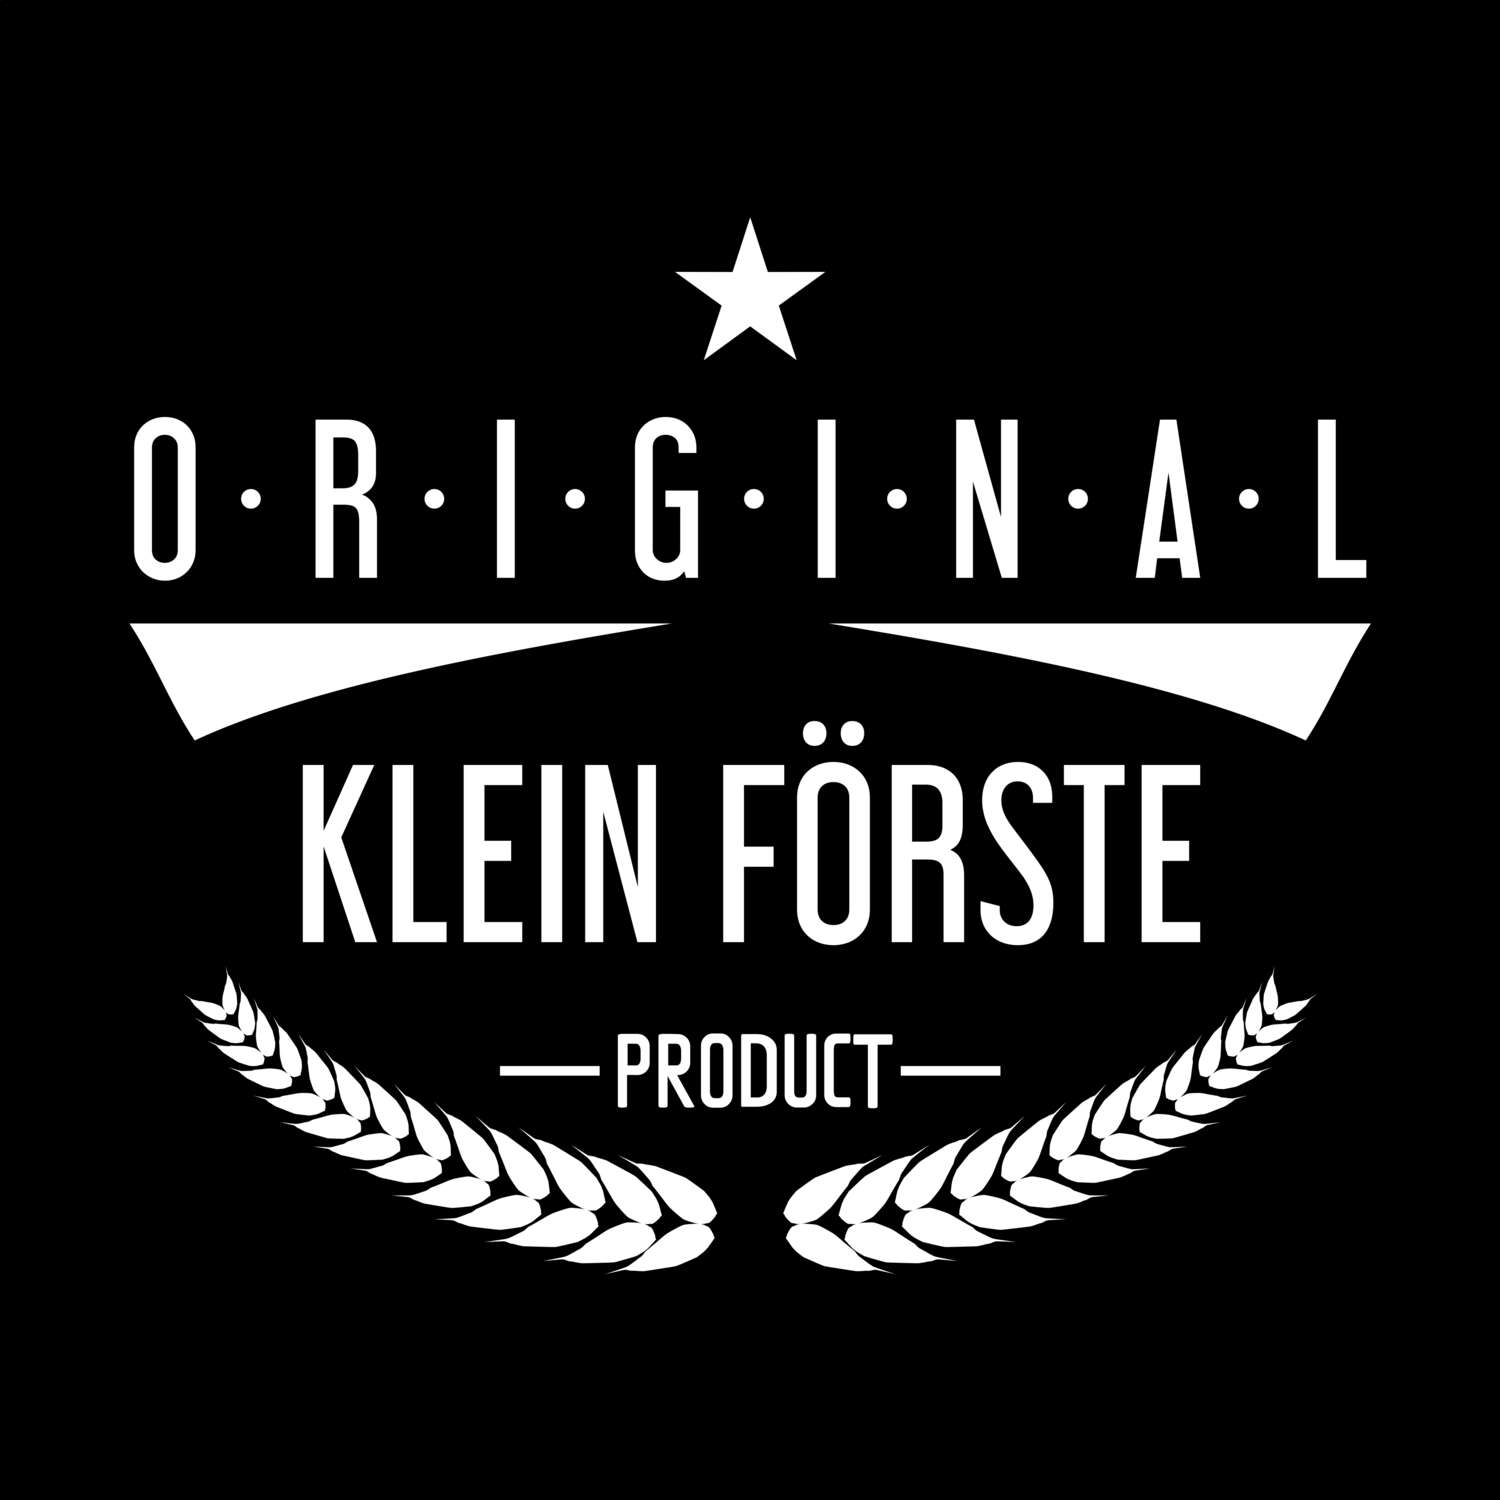 Klein Förste T-Shirt »Original Product«